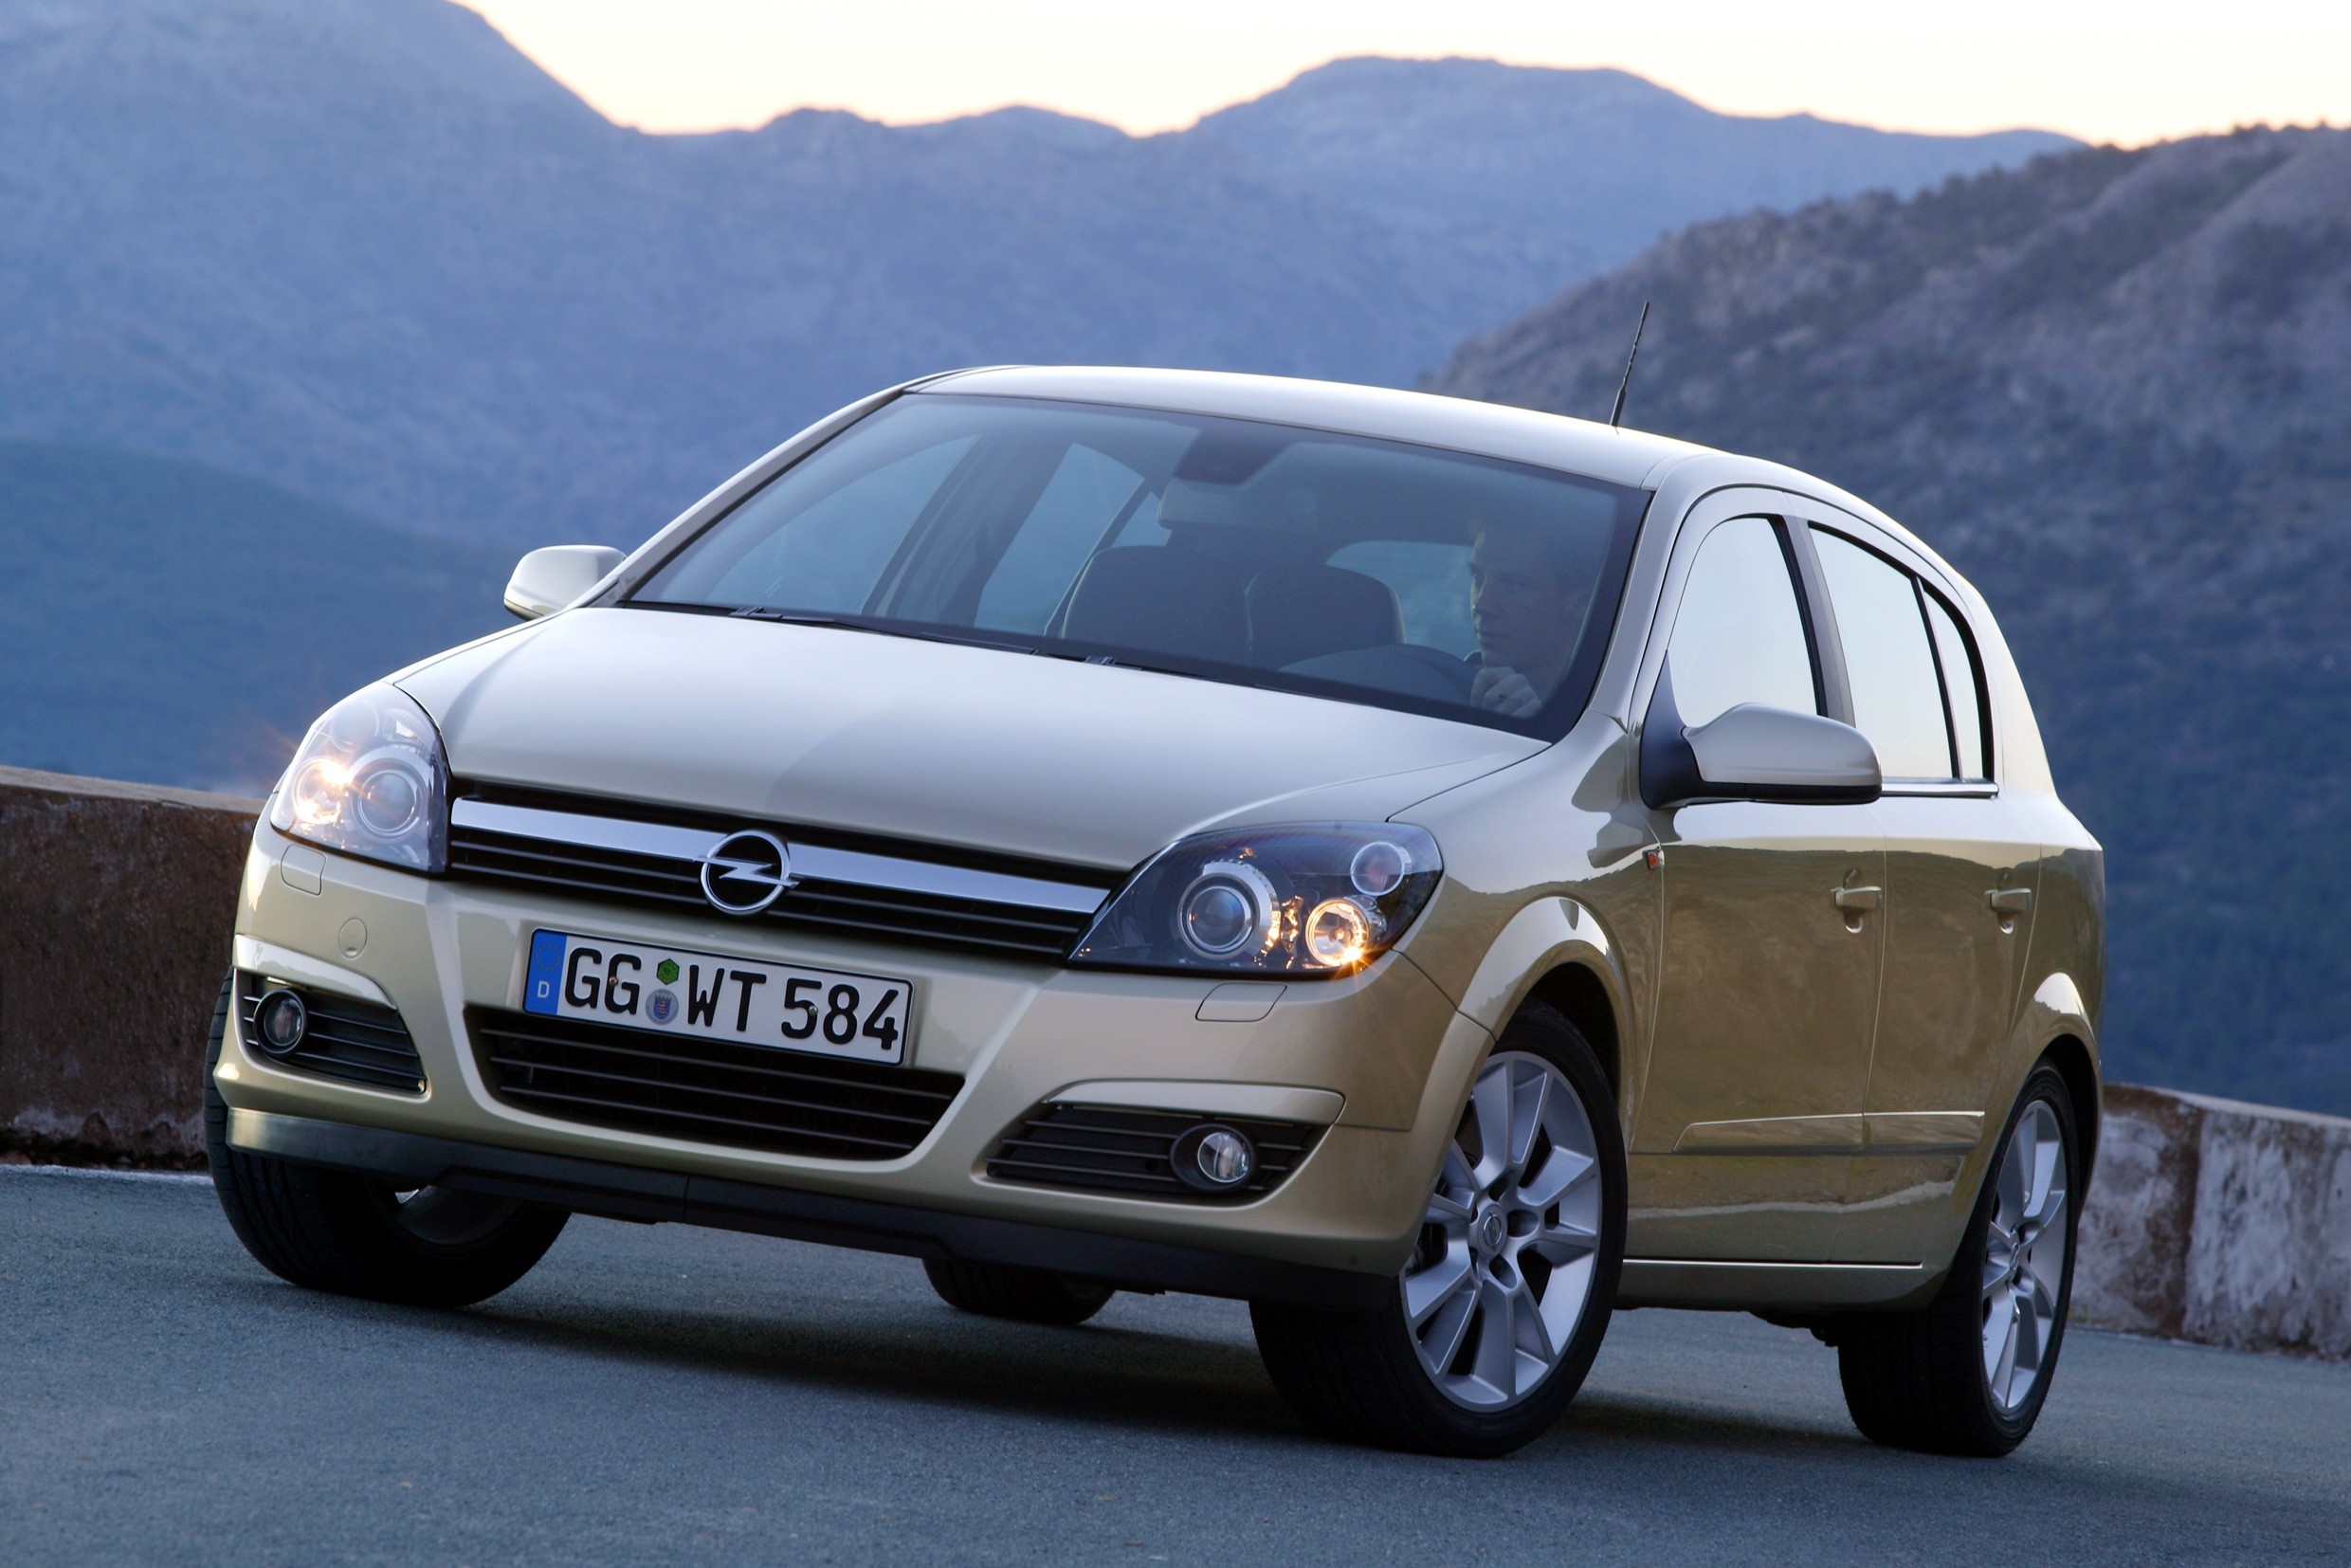 Opel Astra H 1 6 Benzina Pareri Chra turbo OPEL ASTRA H - ALFI TURBO, LA MARQUE REFERENCE